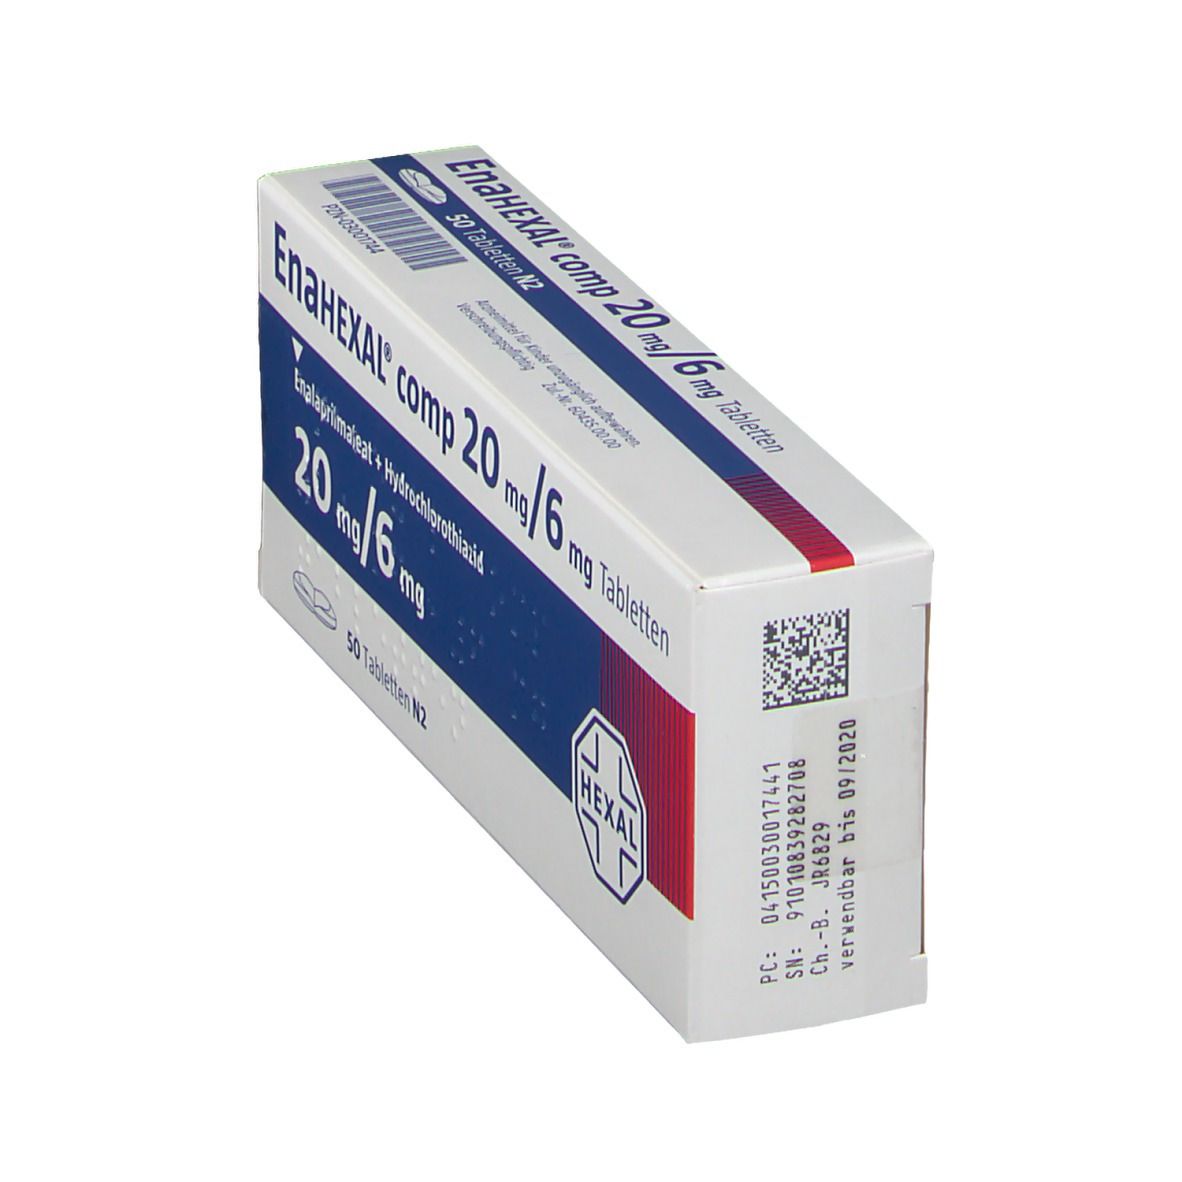 EnaHEXAL® comp 20 mg/6 mg